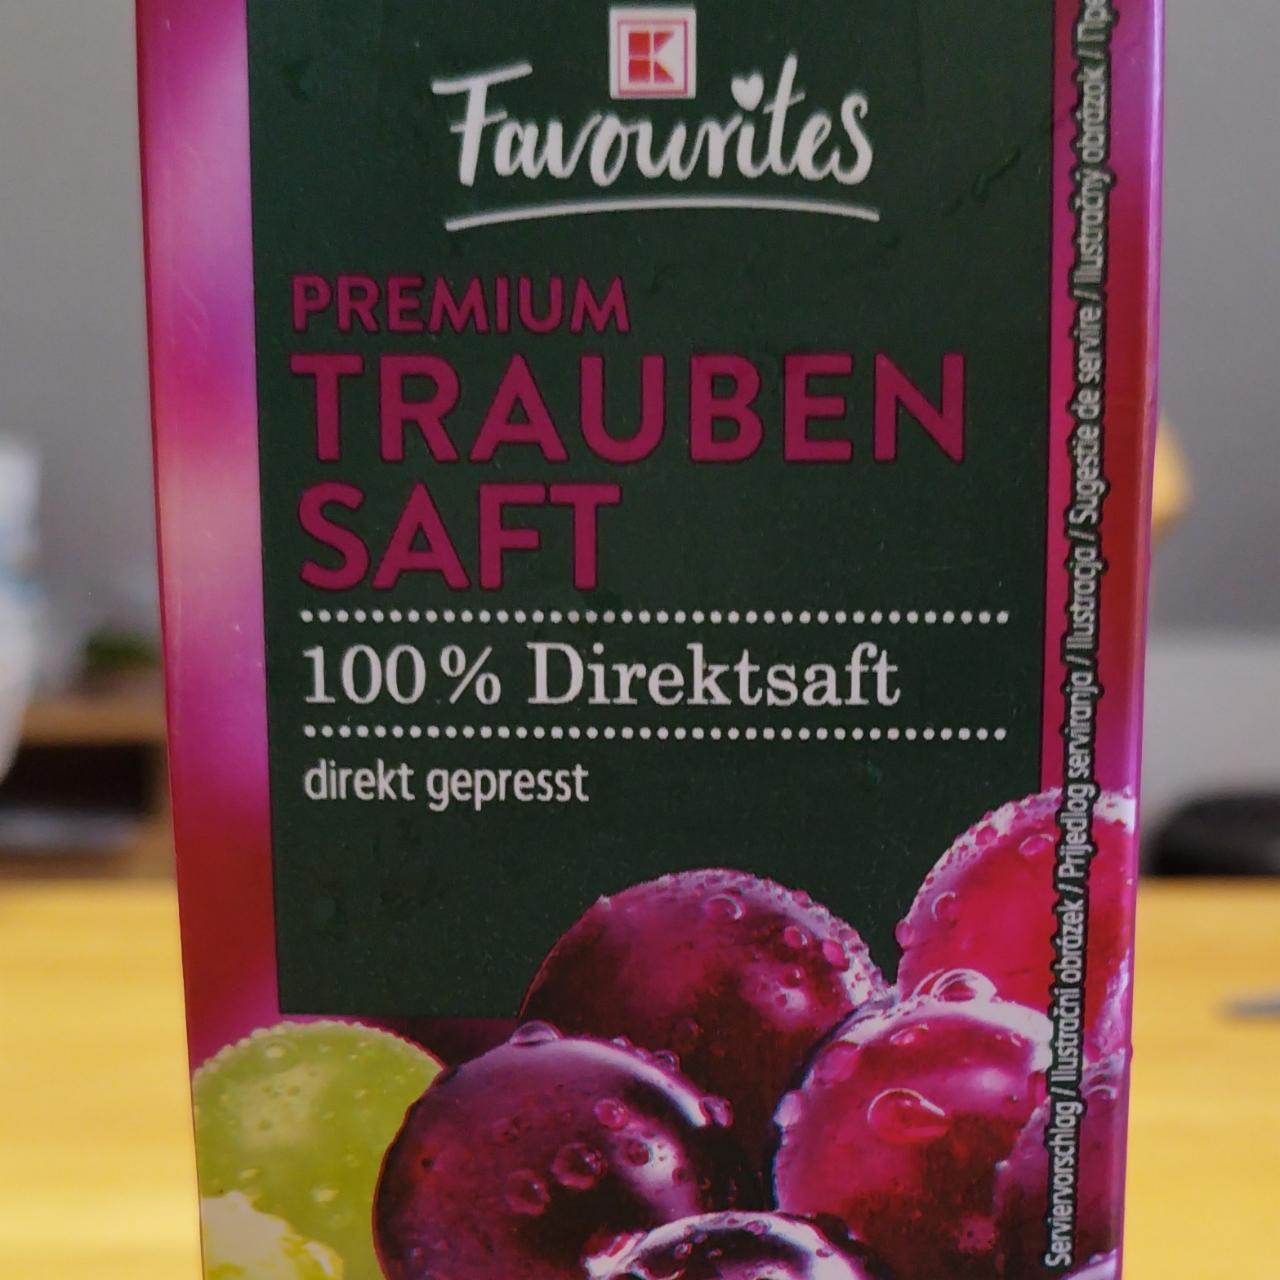 Zdjęcia - Premium Trauben Saft 100% K-Favourites